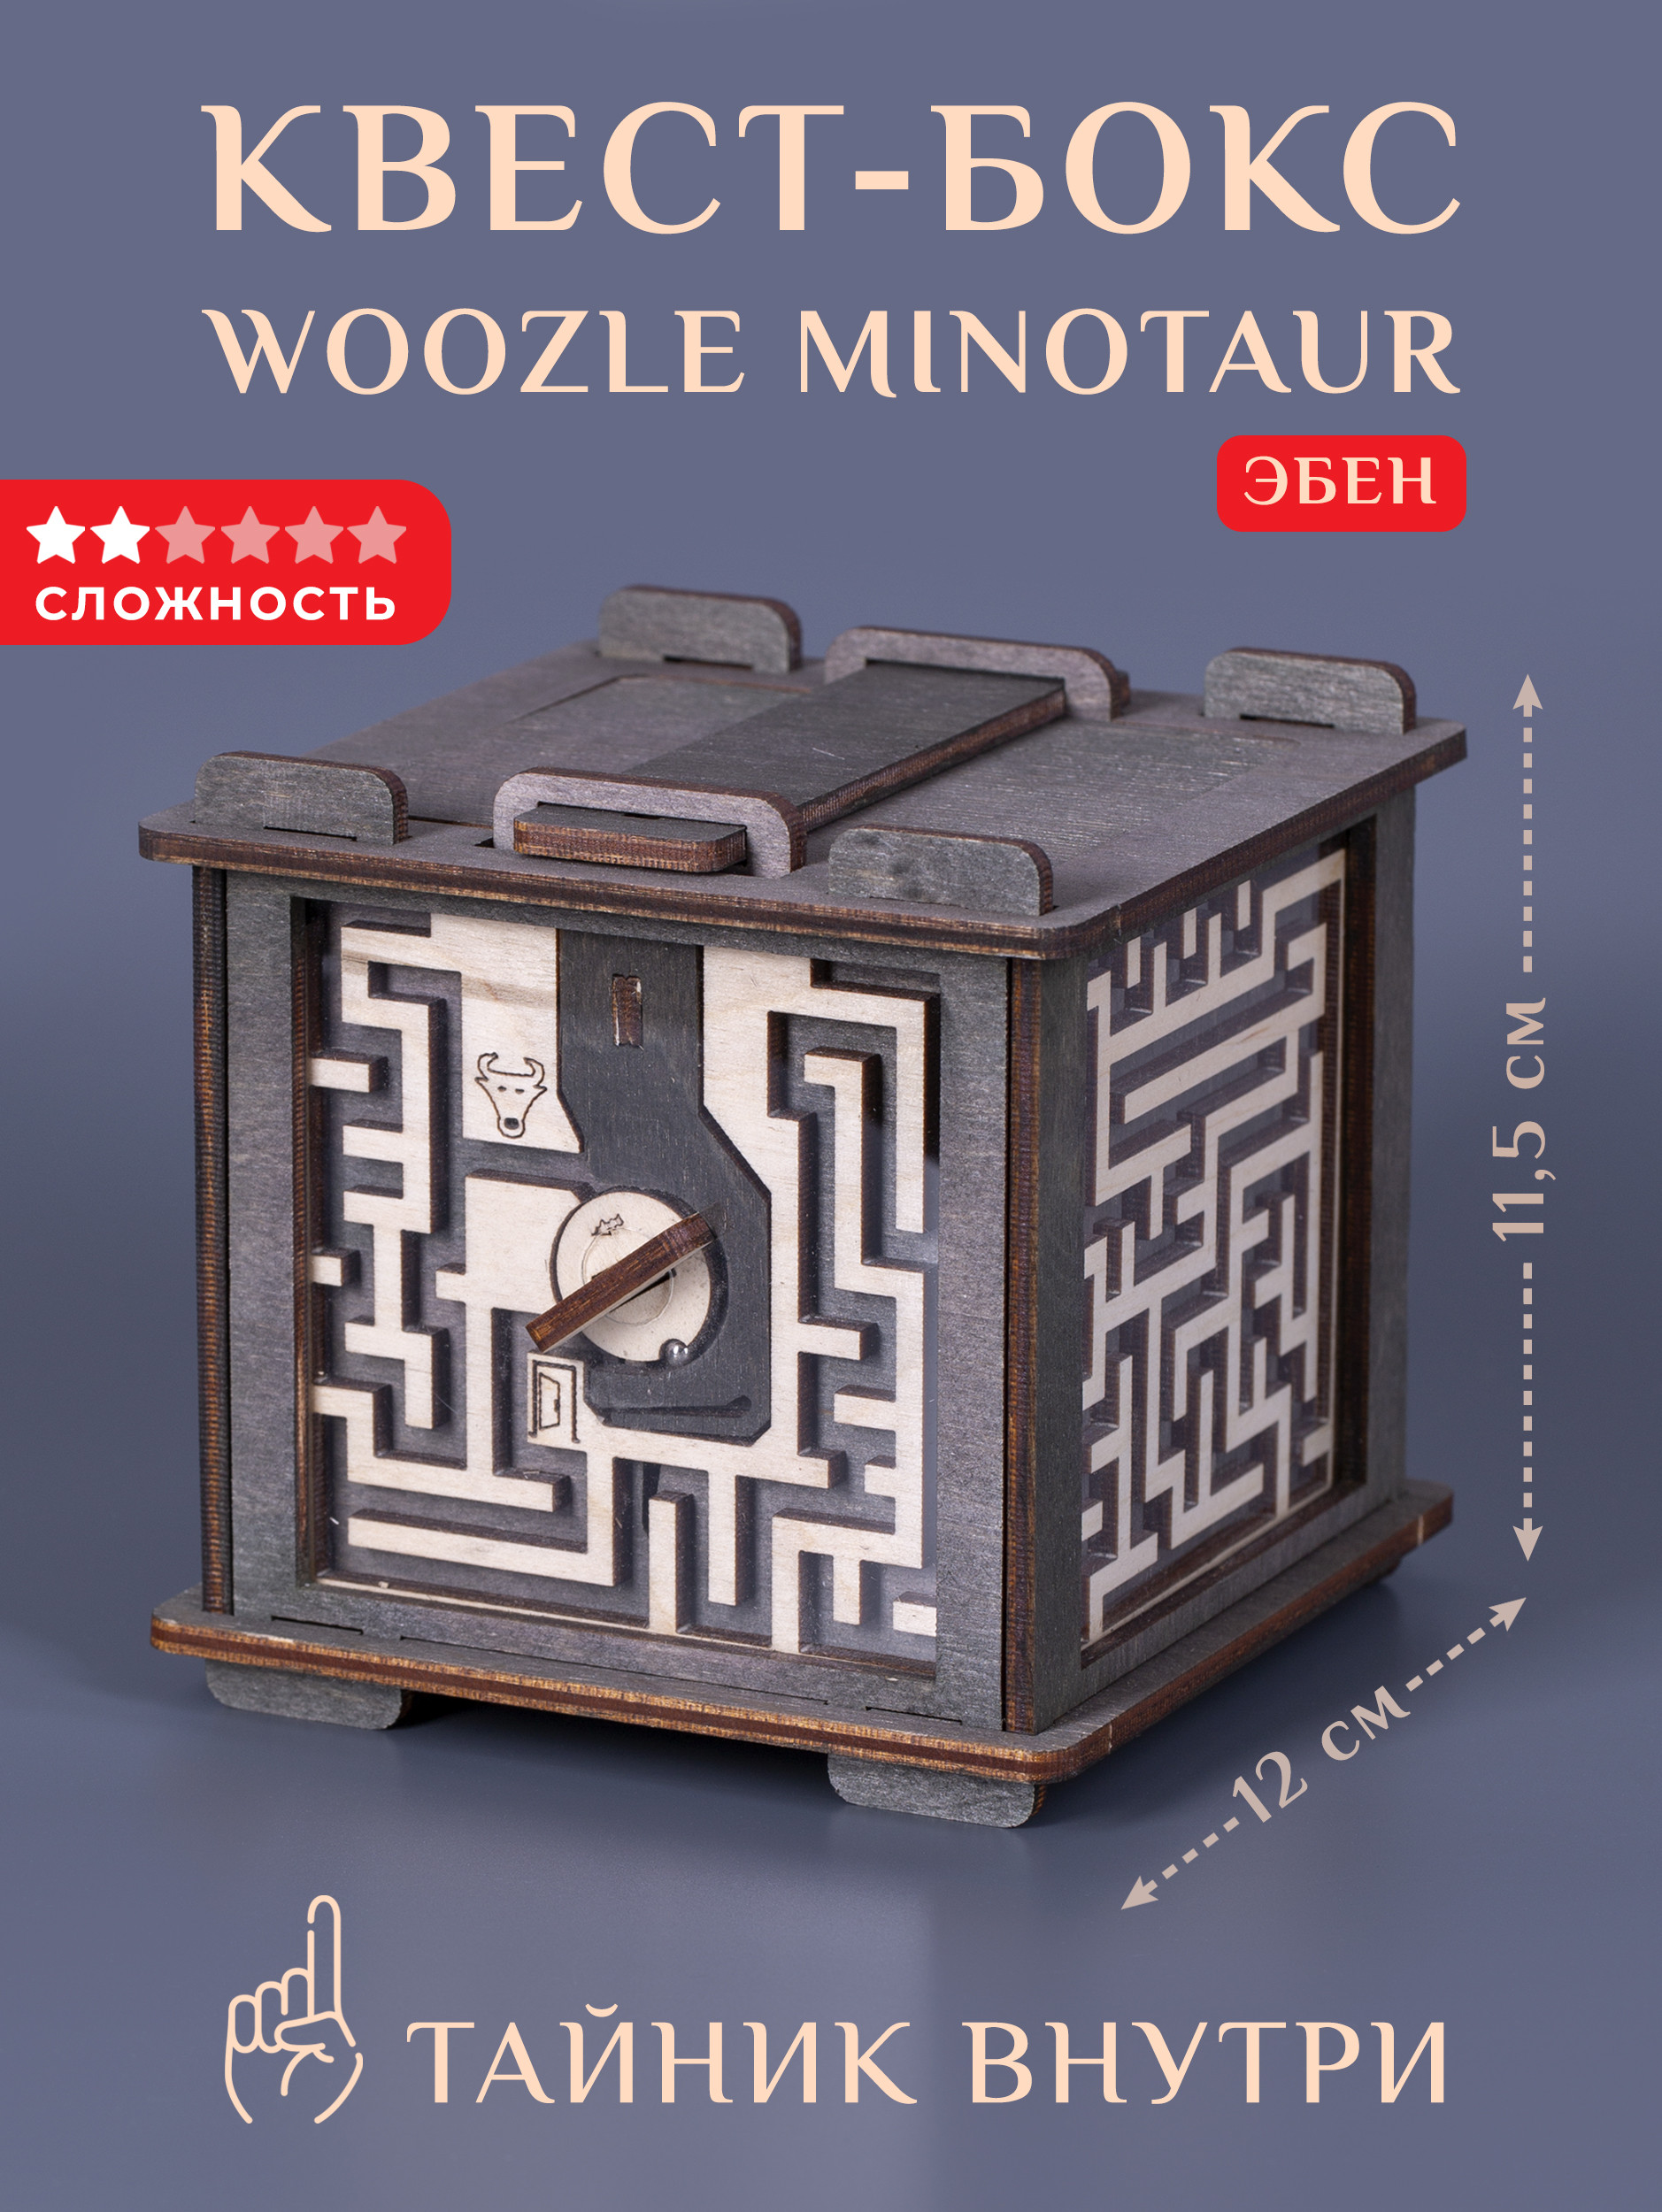 Деревянная квест-шкатулка Woozle лабиринт Minotaur Эбен правила успеха музыкальная деревянная шкатулка шарманка